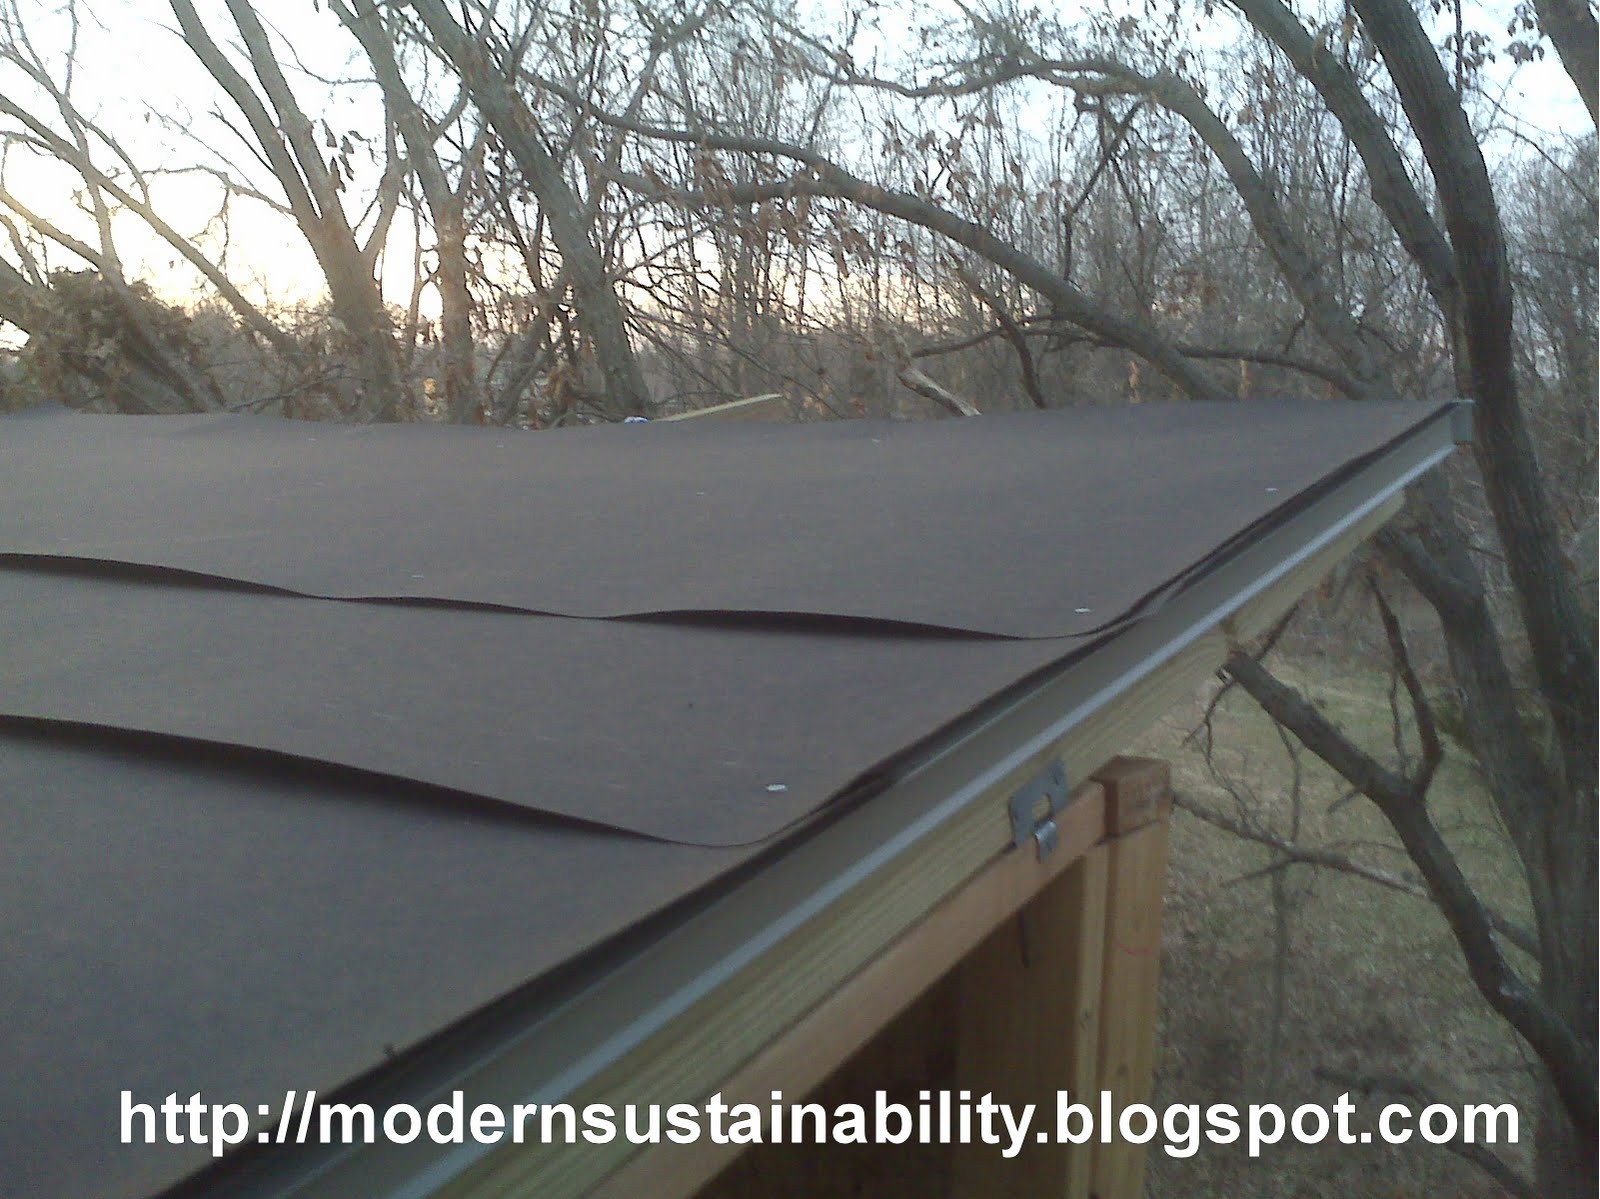 Modern Sustainability...old-fashioned methods: Tree house siding and ...